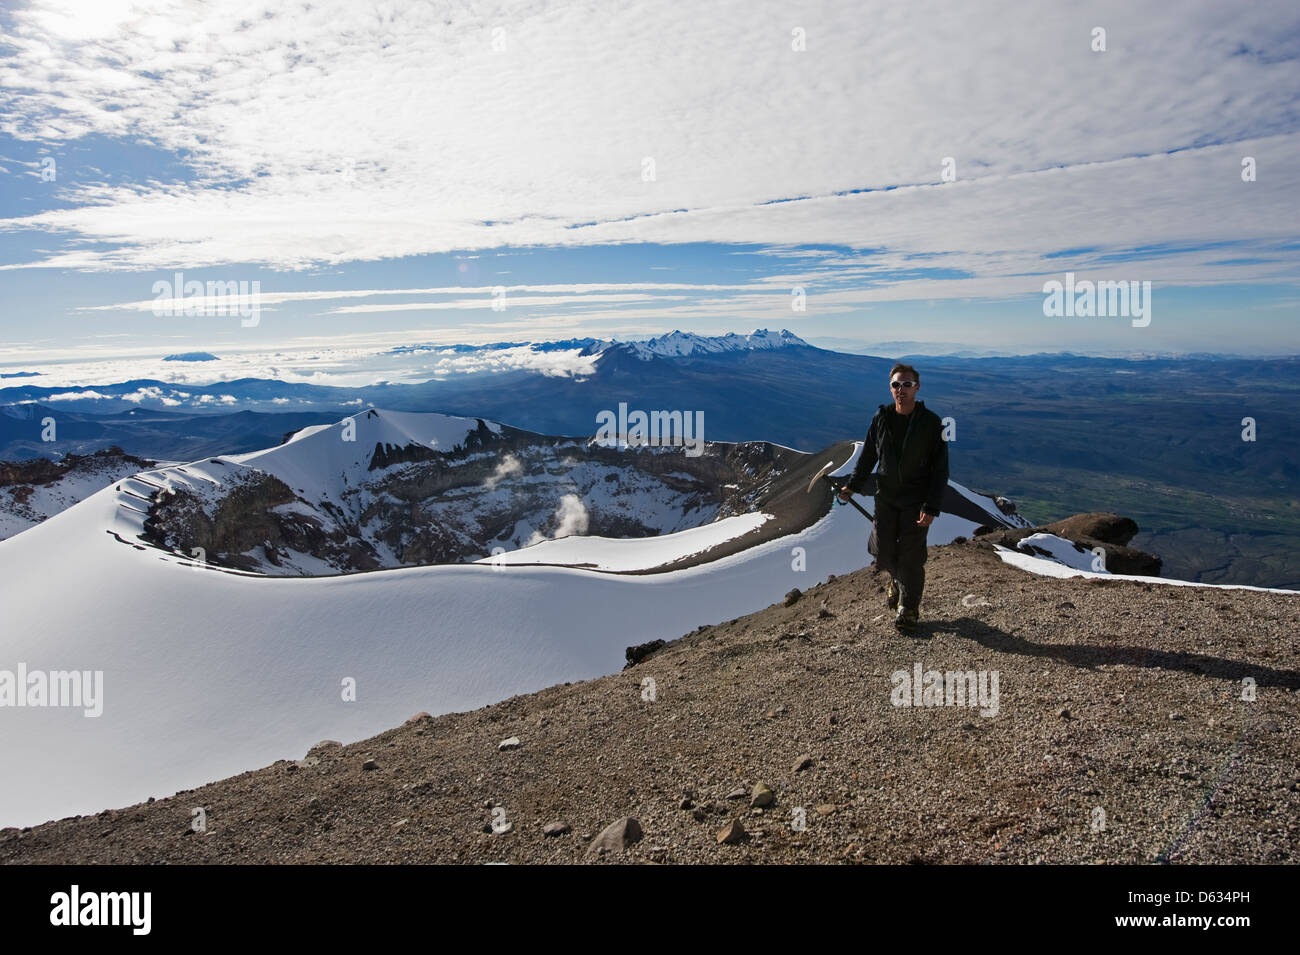 Gipfel des Vulkans El Misti, 5822m, Arequipa, Peru Südamerika (MR) Stockfoto